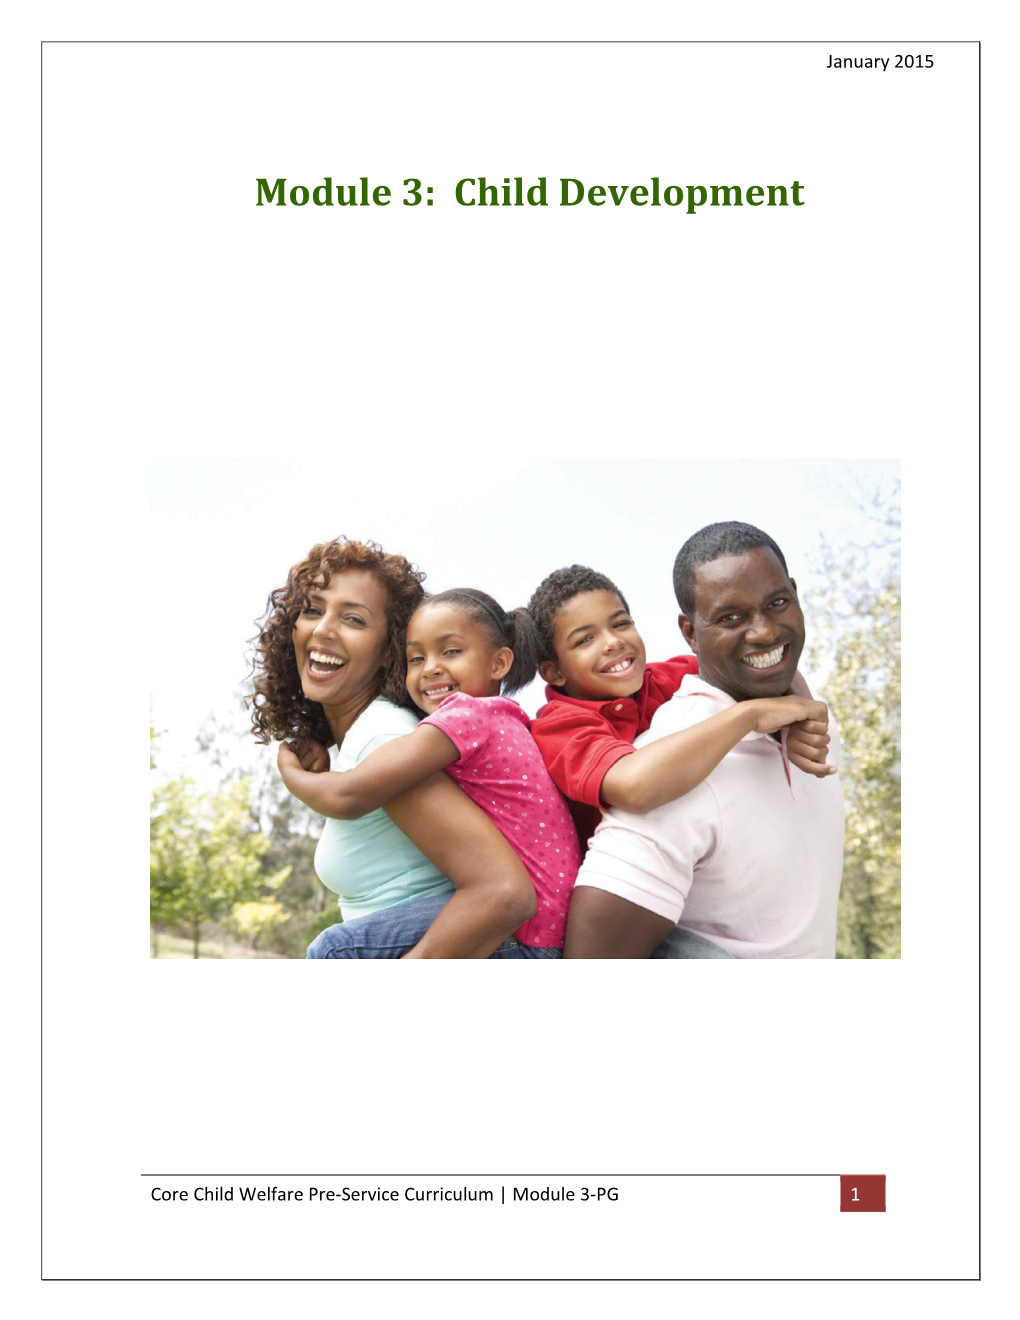 Core Child Welfare Pre-Service Curriculum | Participant Guide